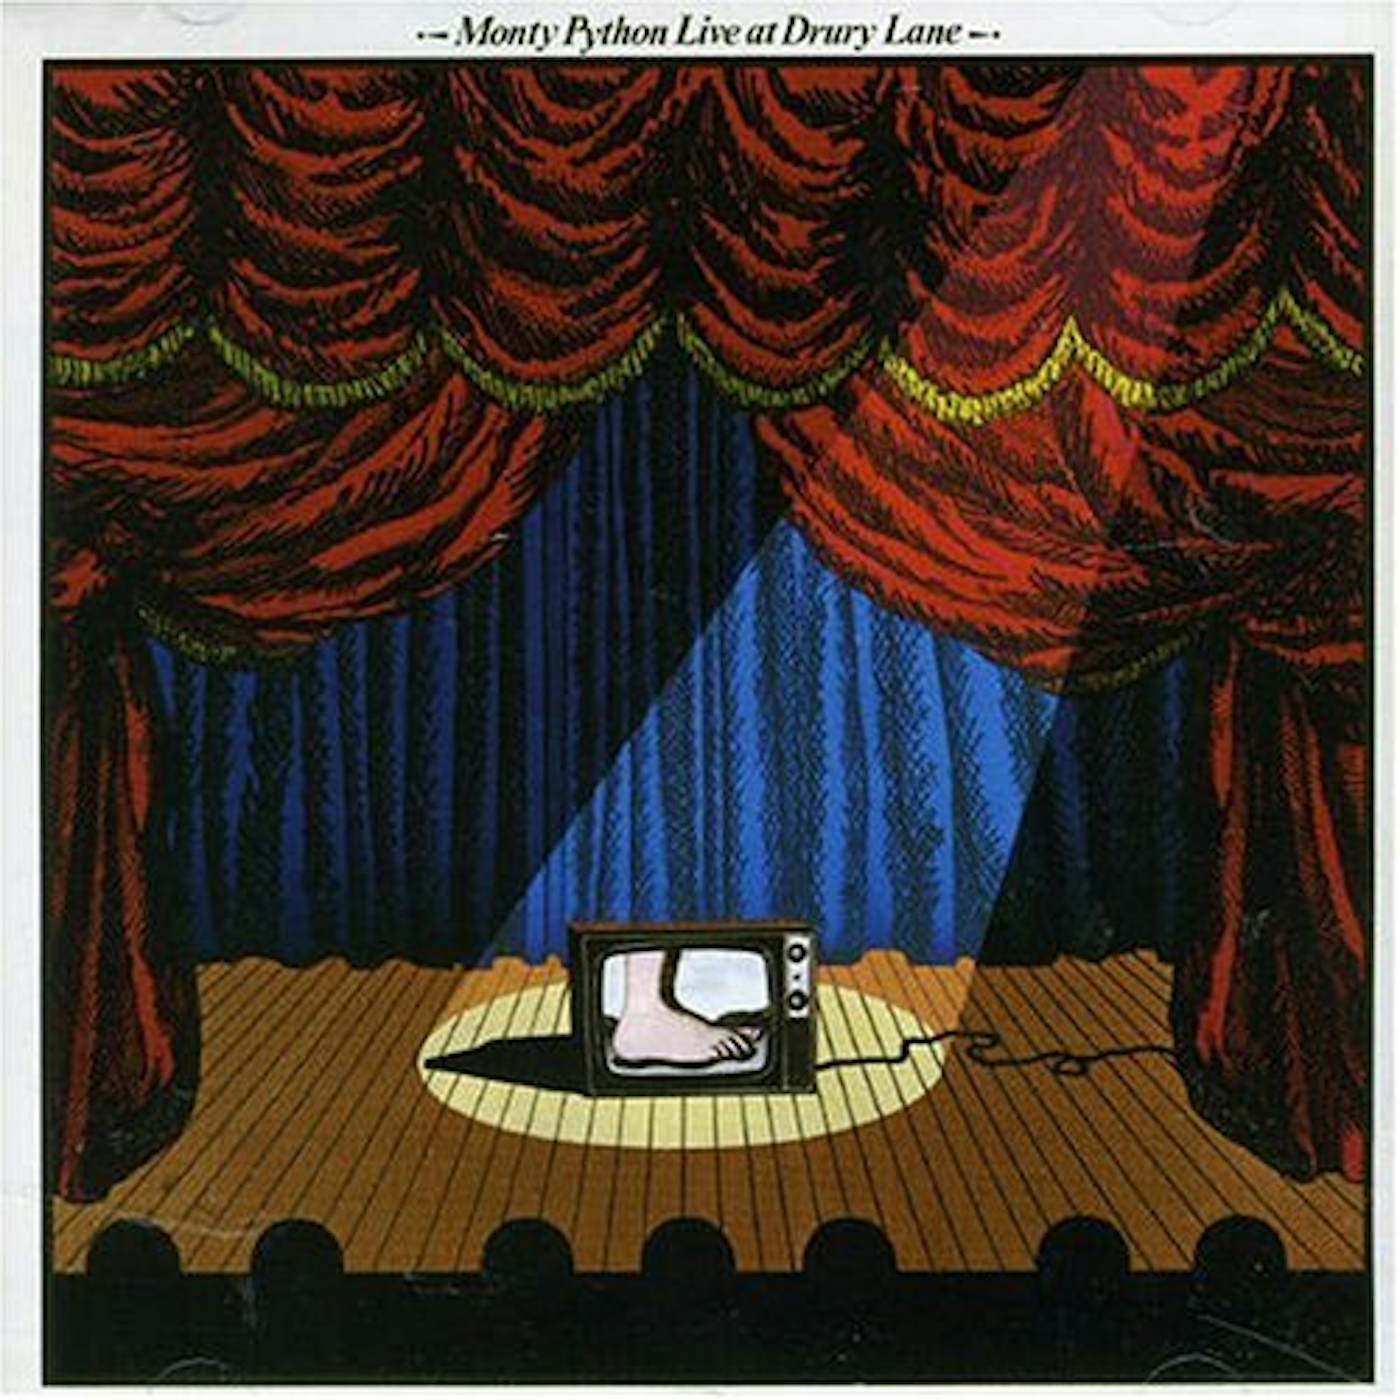 Monty Python LIVE AT DRURY LANE CD